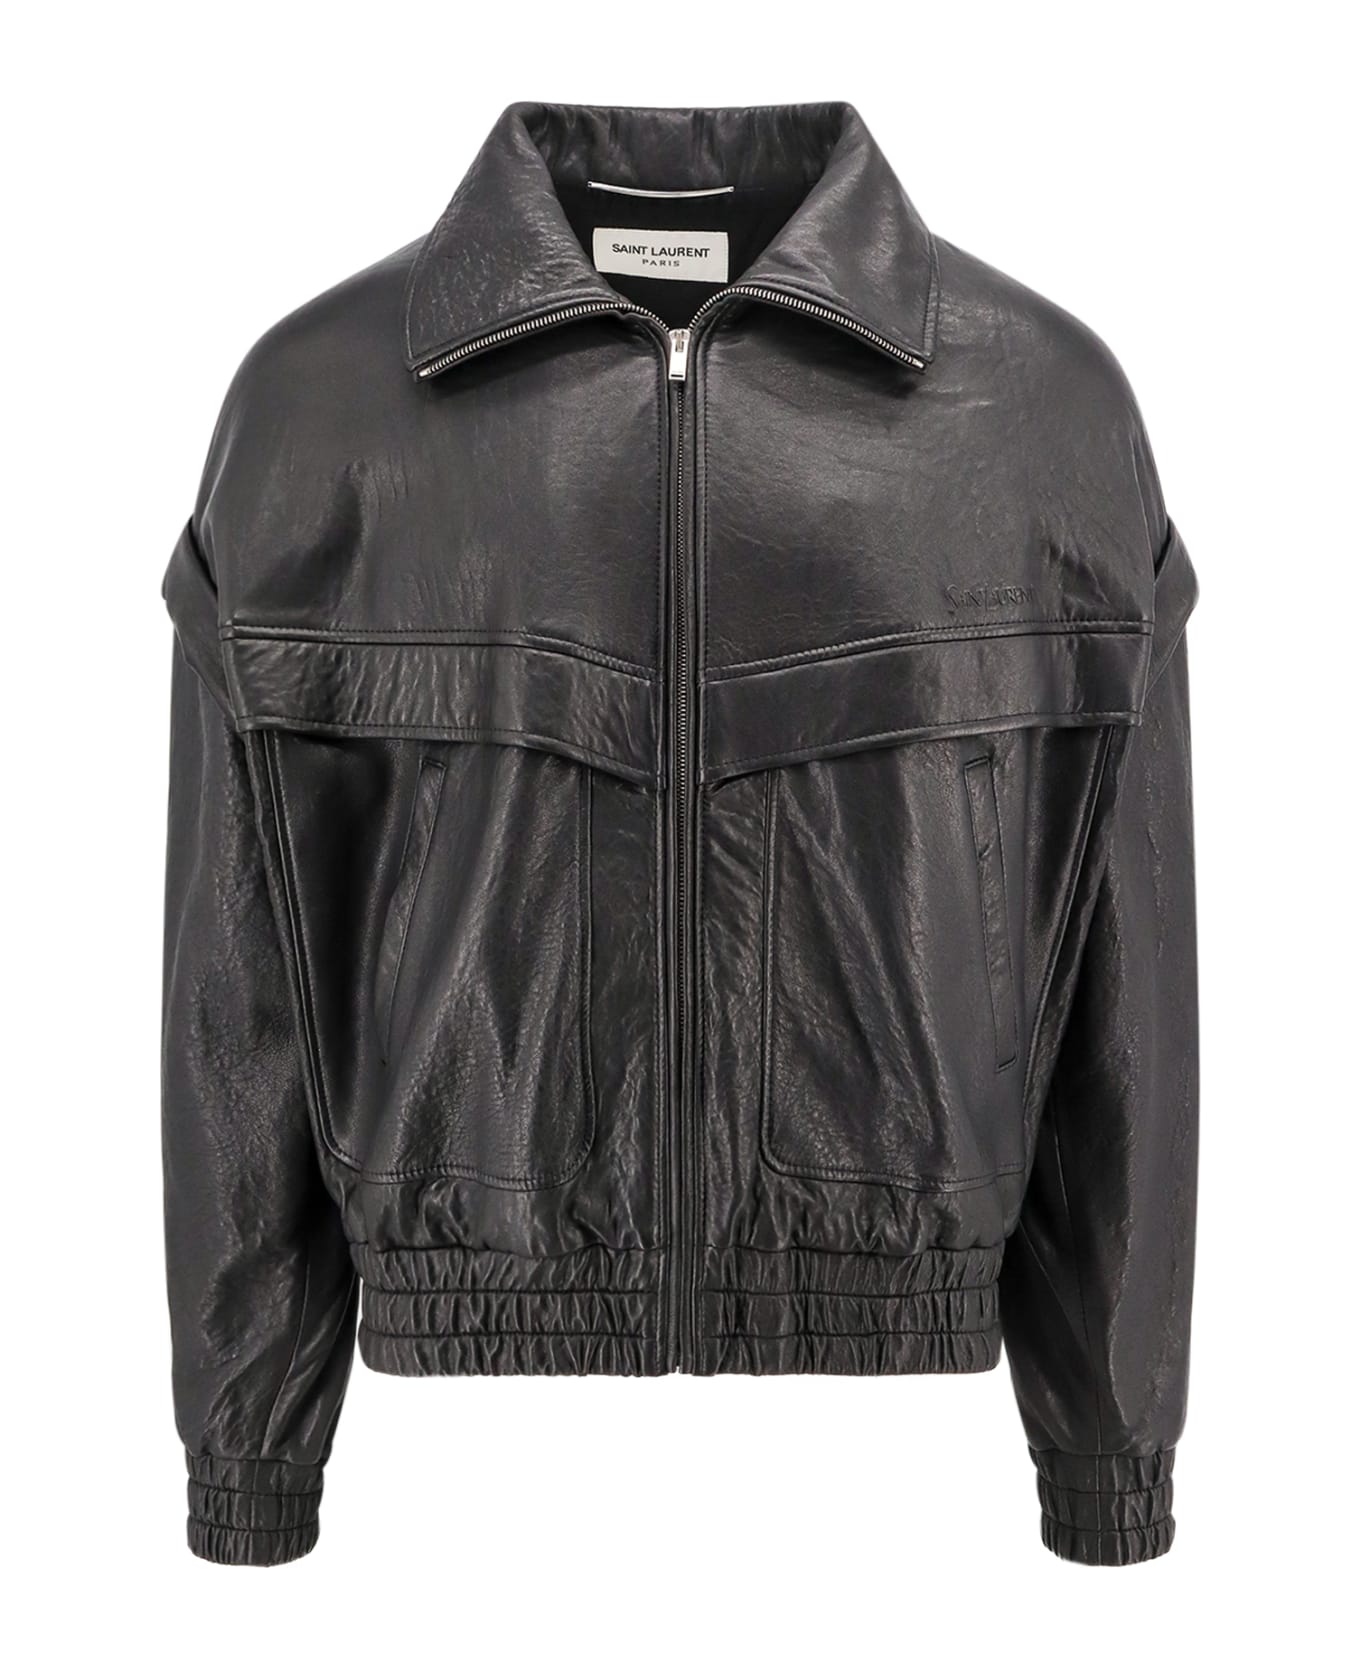 Saint Laurent Black Bomber Jacket With Dropped Shoulders In Leather Man - Black